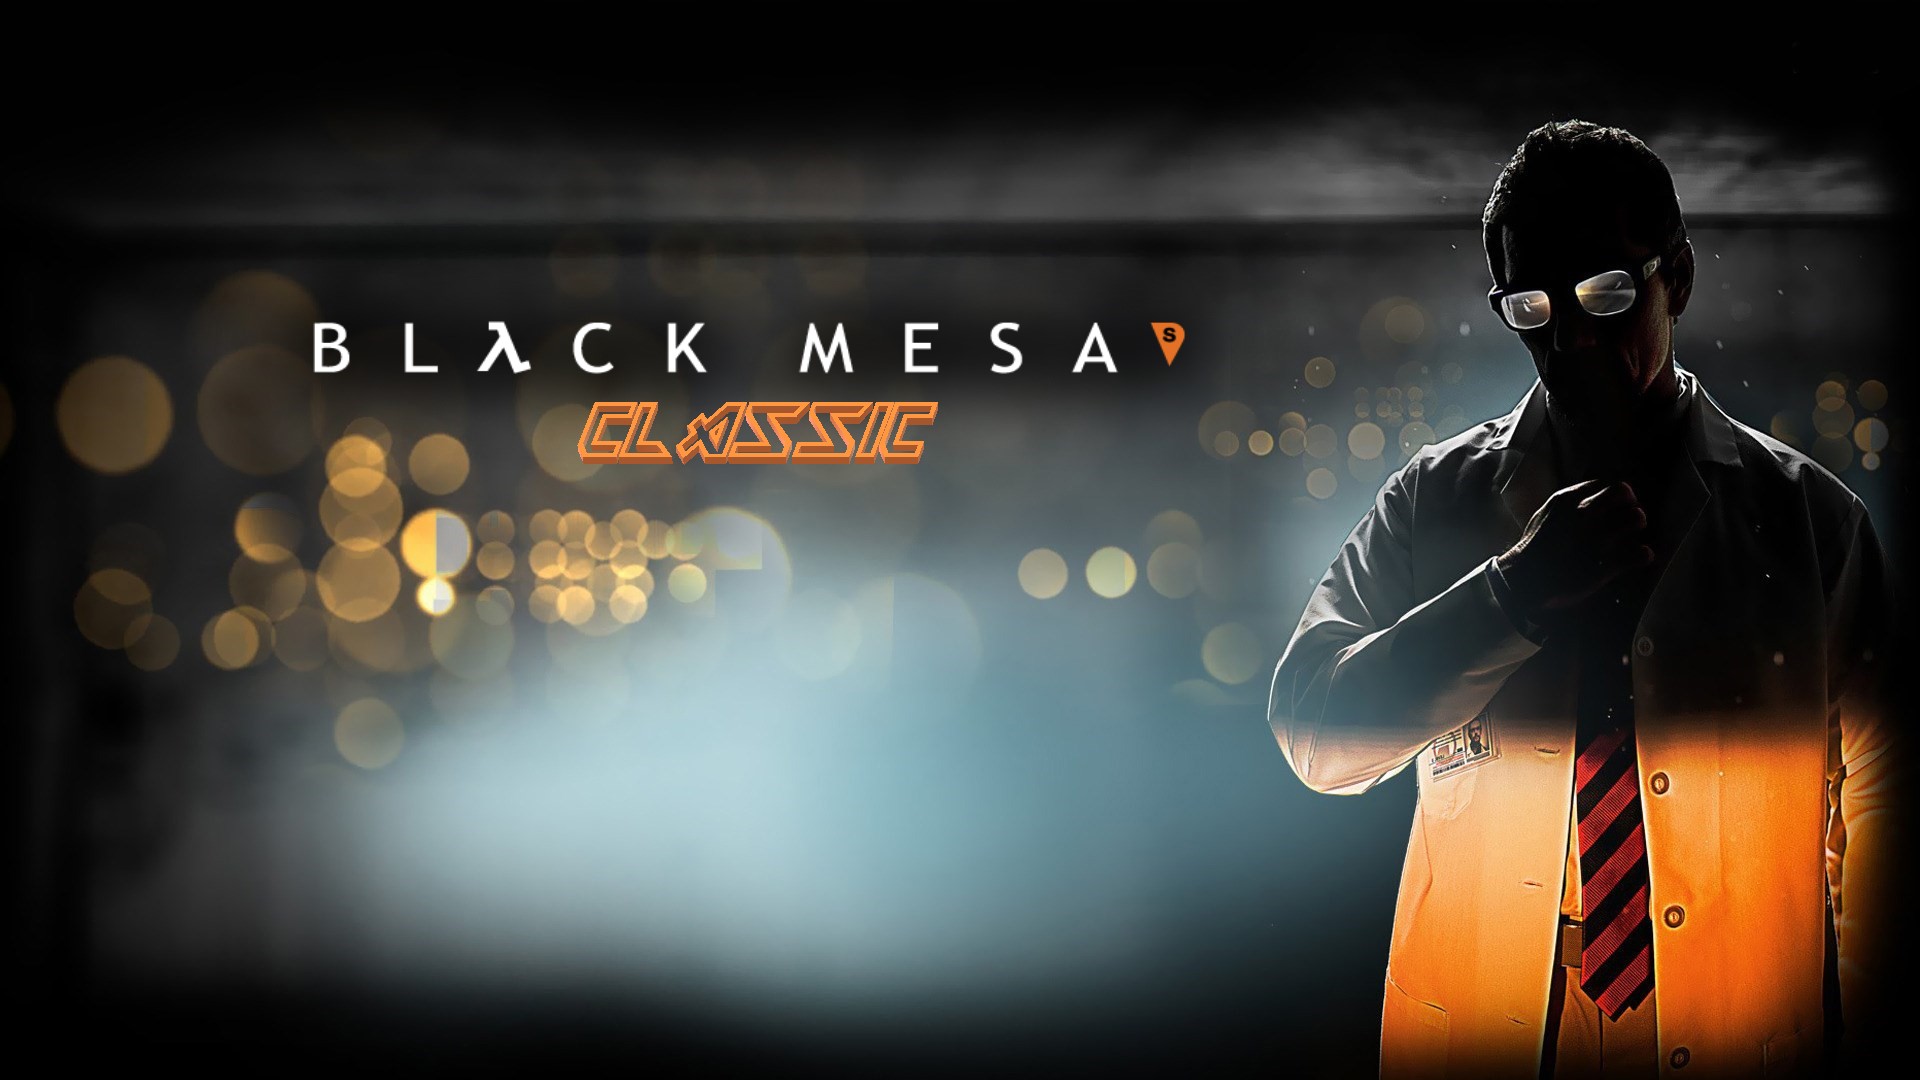 Zwiastun demonstracyjny Black Mesa Classic to demo remake'u Black Mesa opartego na silniku Half-Life